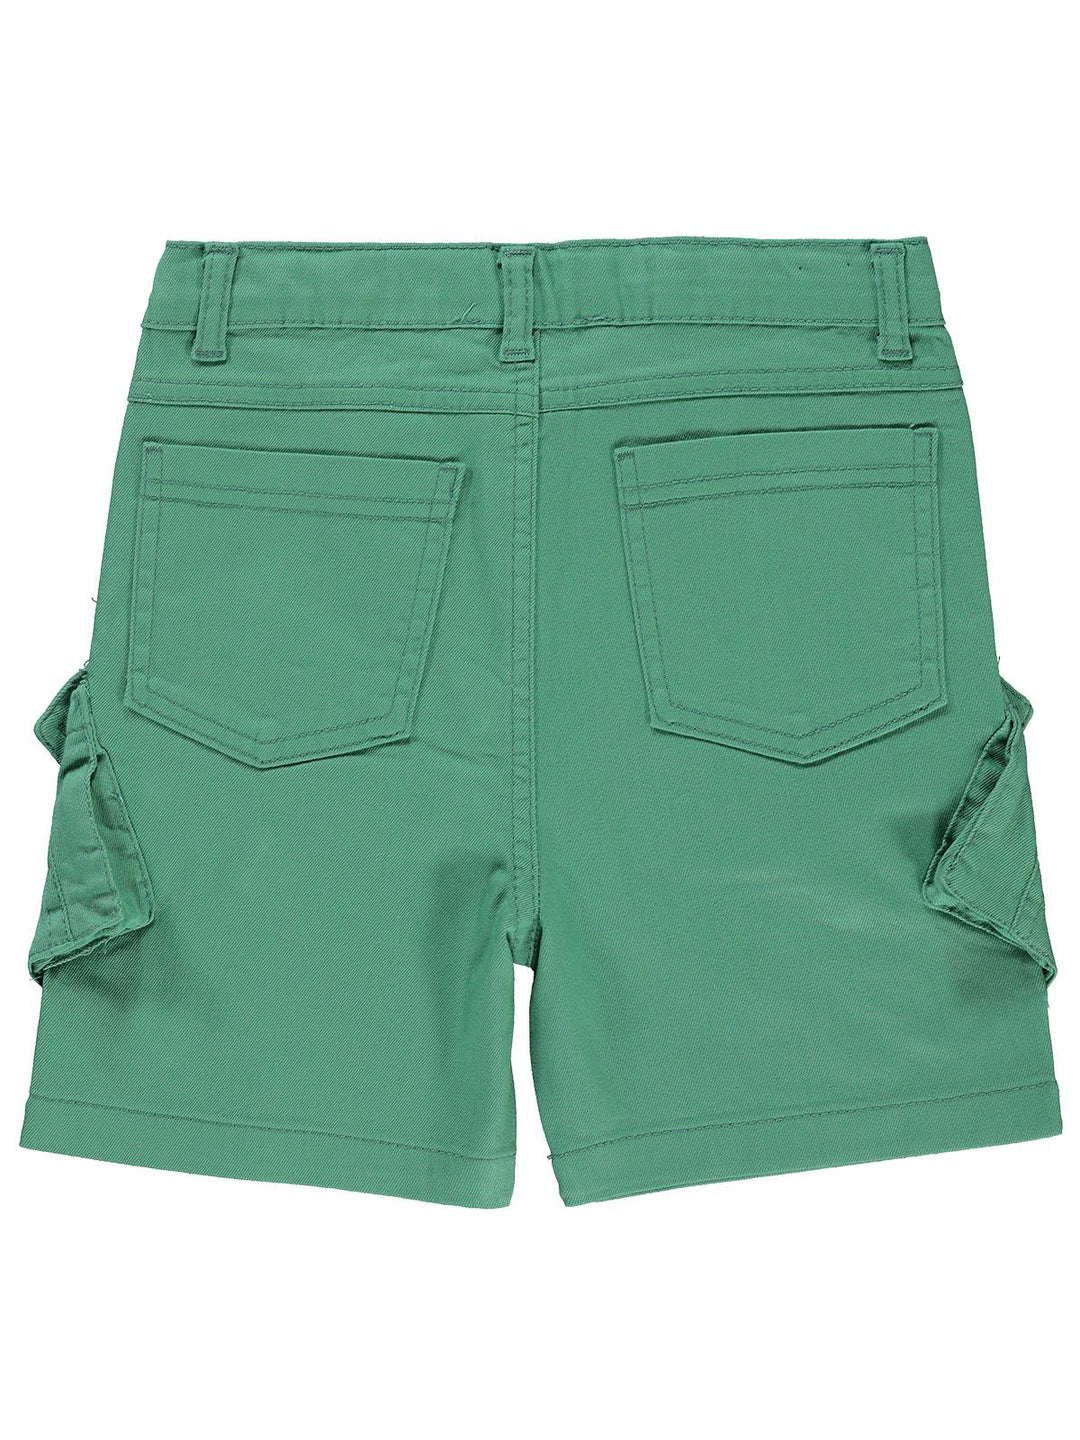 Civil Boys Cotton Shorts #4802-1 (S-22)